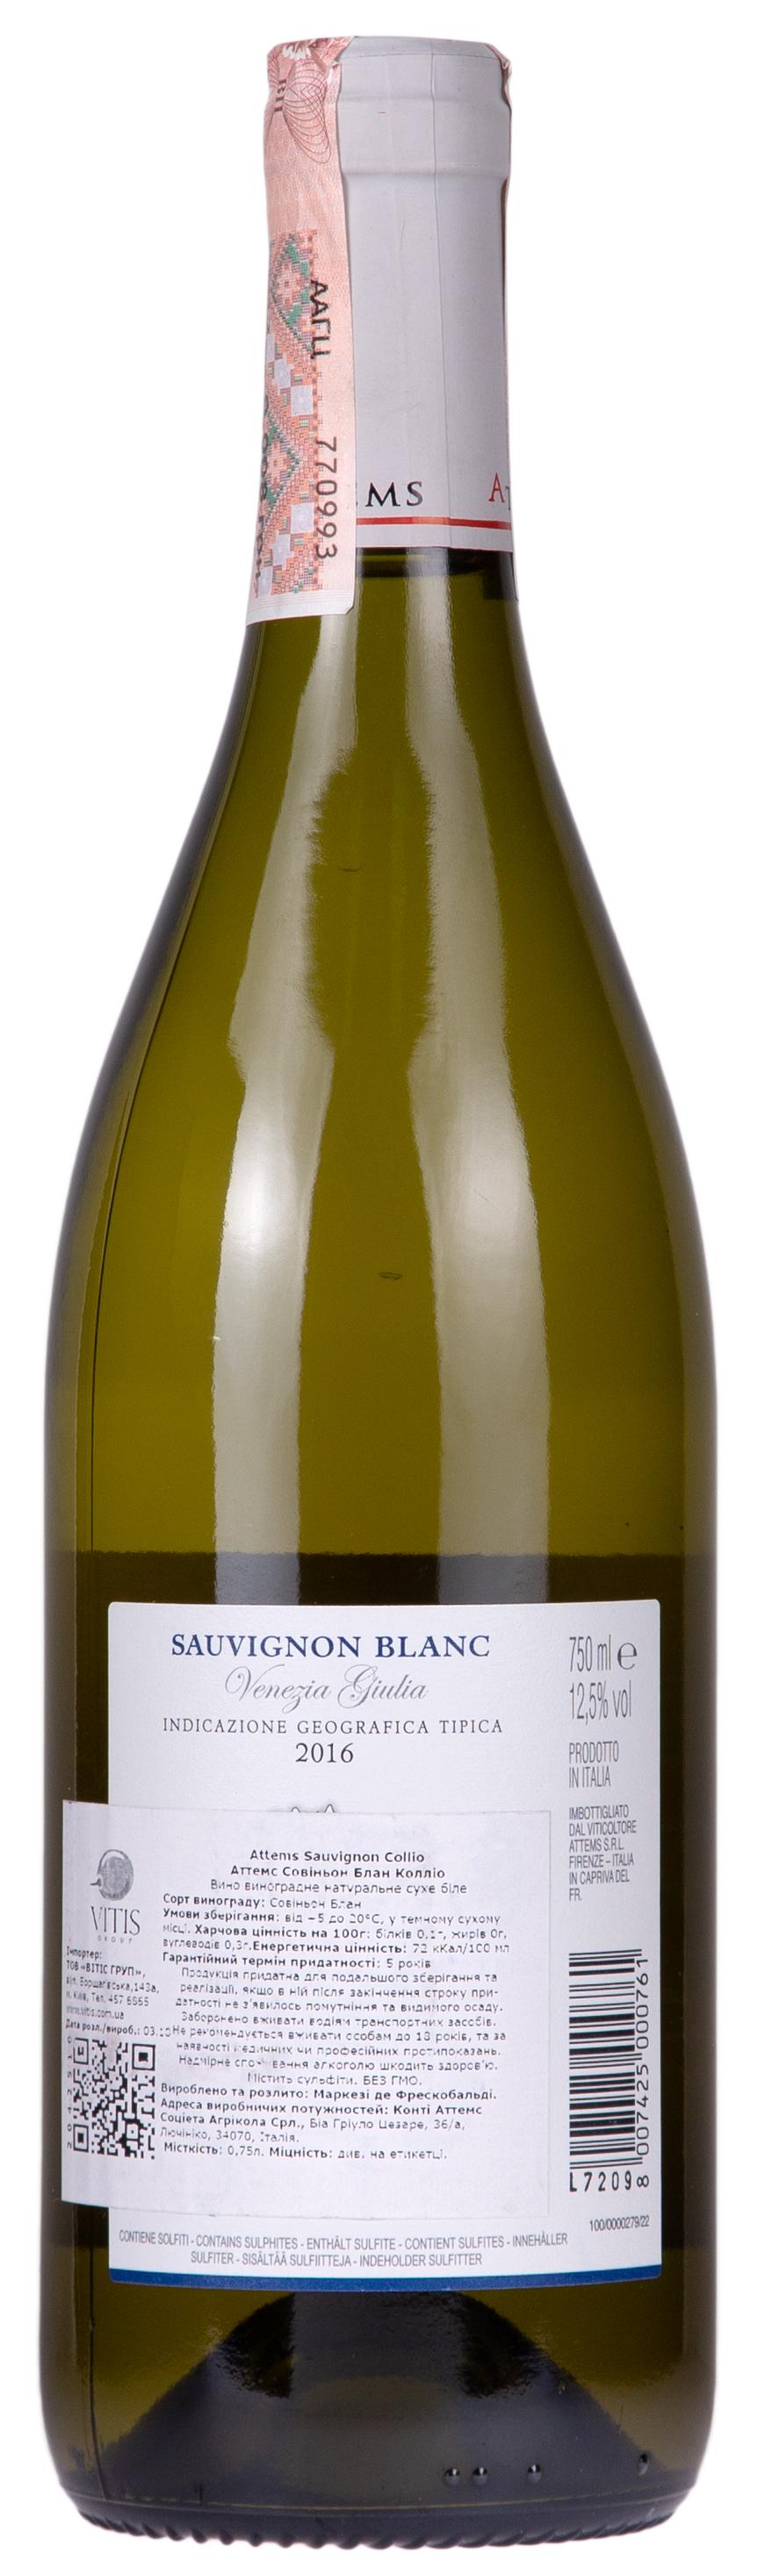 Attems Sauvignon Blanc Collio 2016 - 2